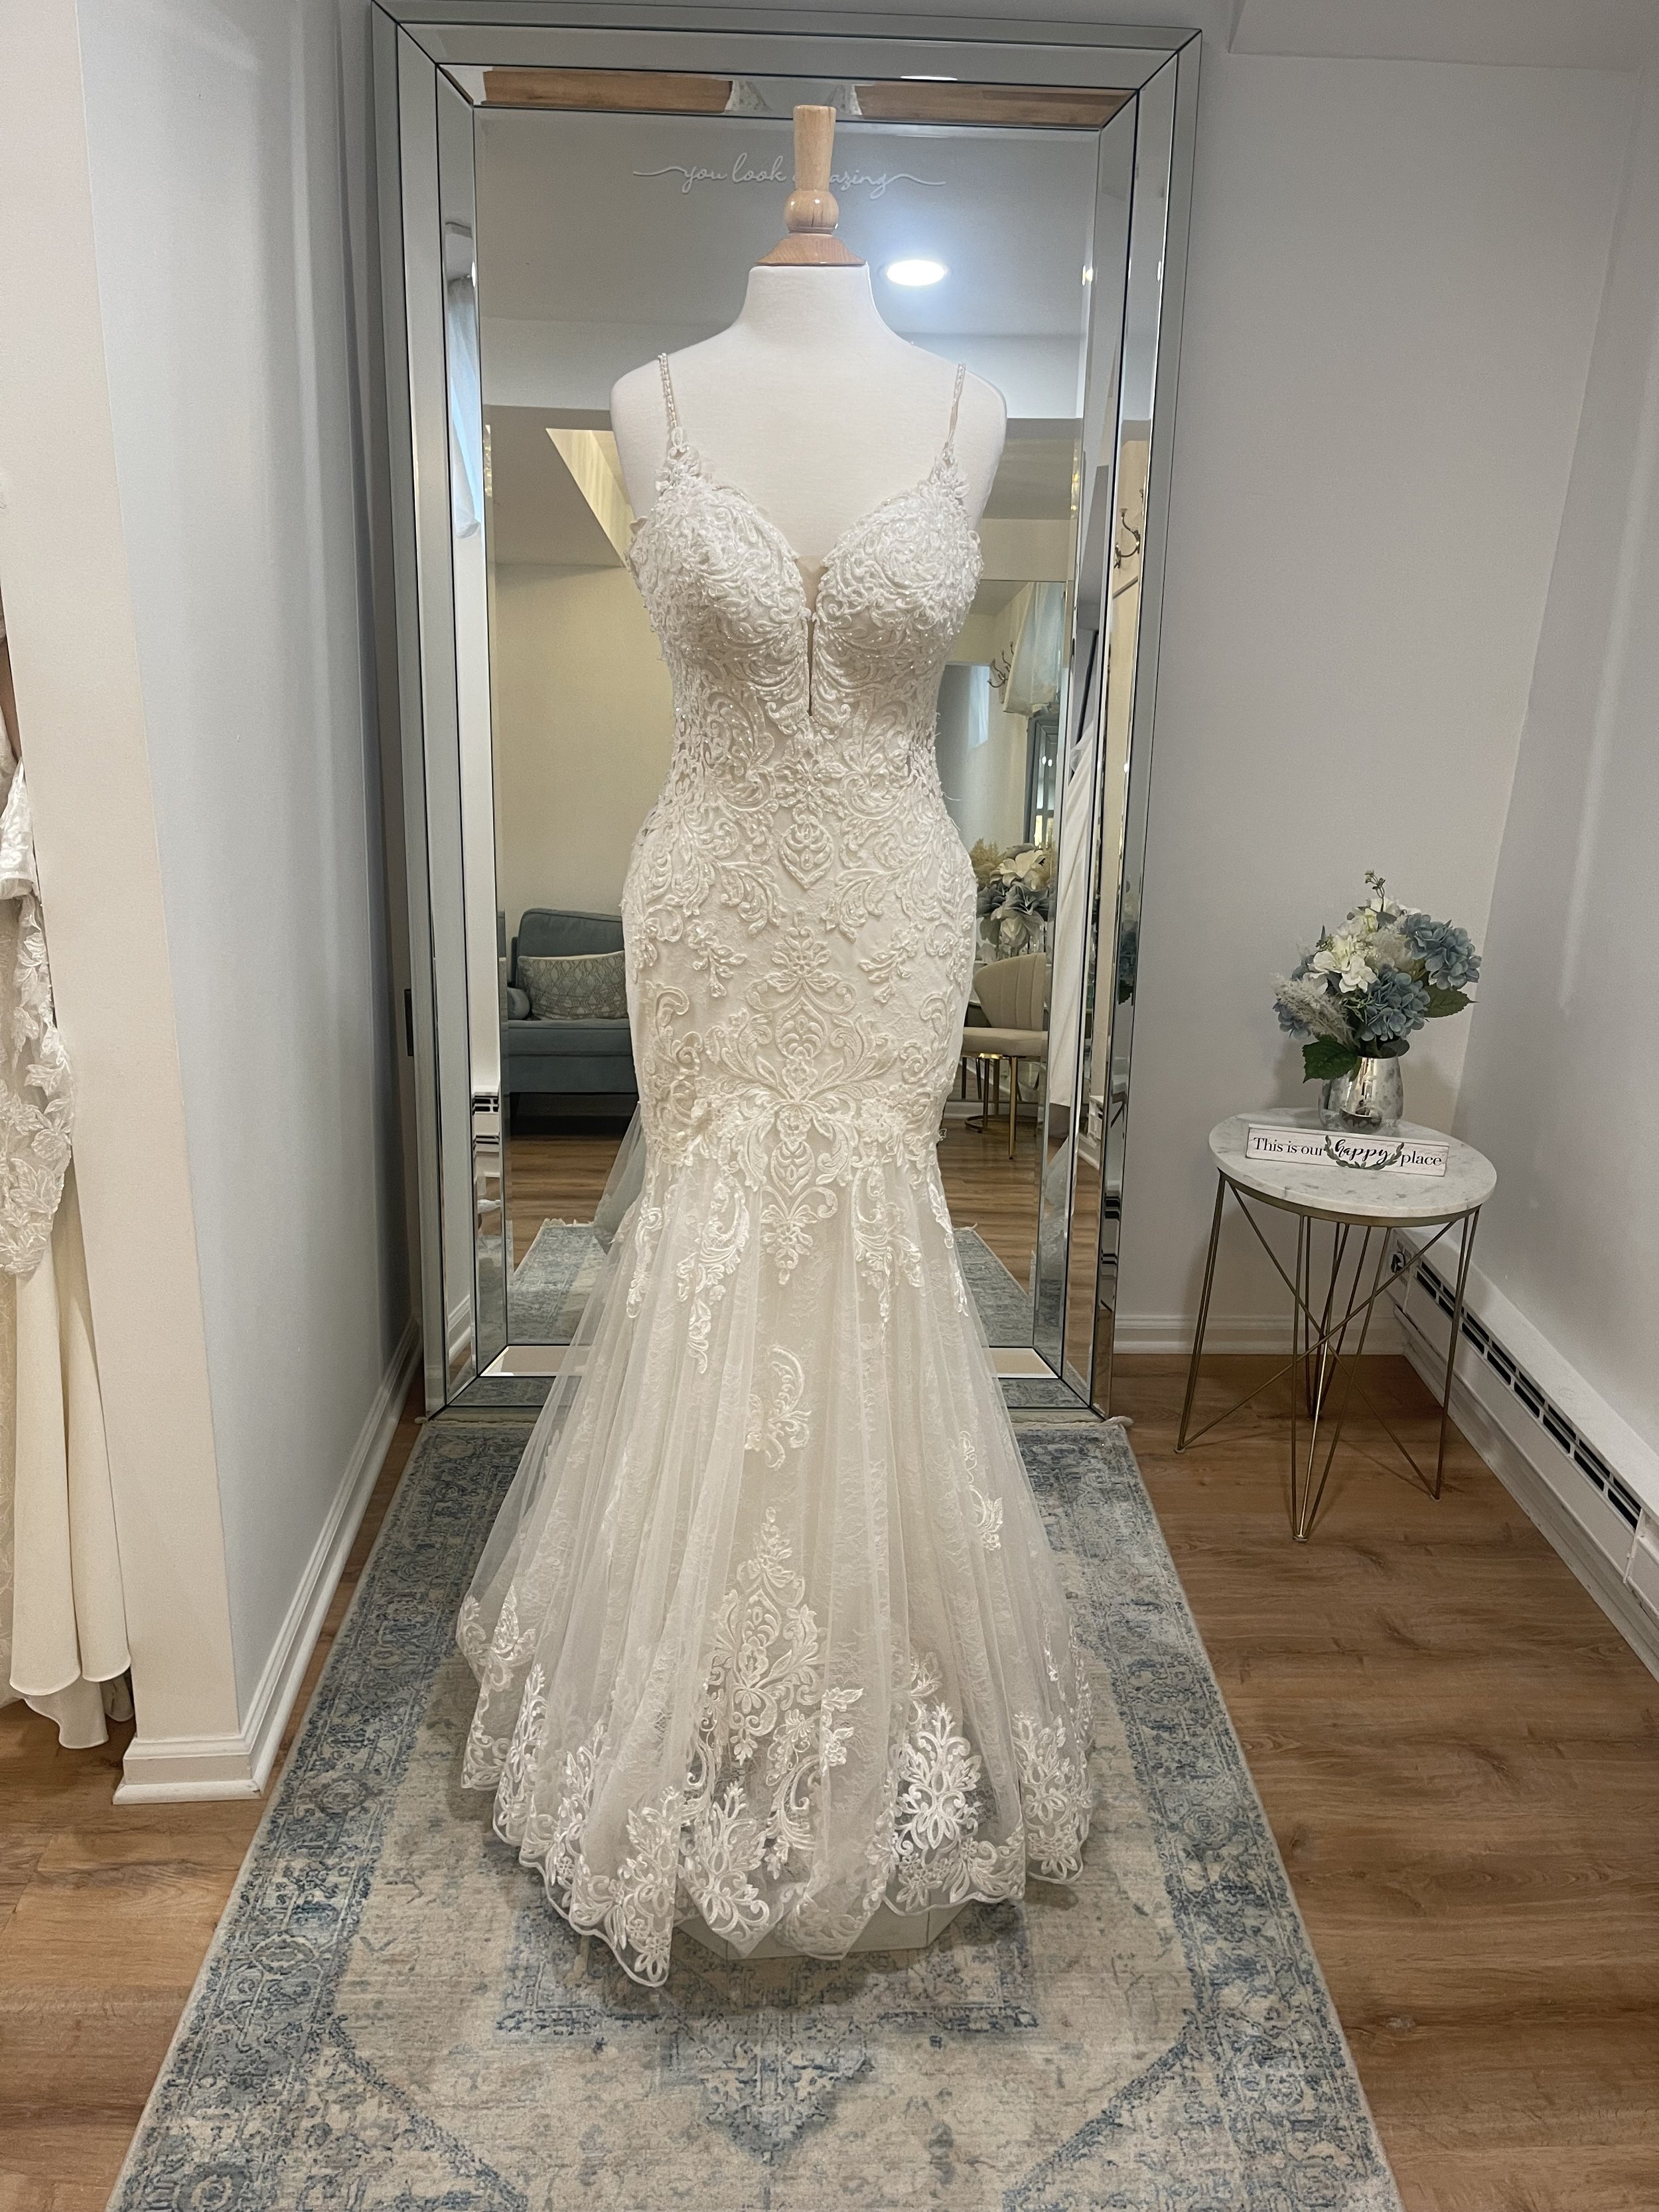 Boho wedding dress | Wedding gowns all styles | Leah S Designs